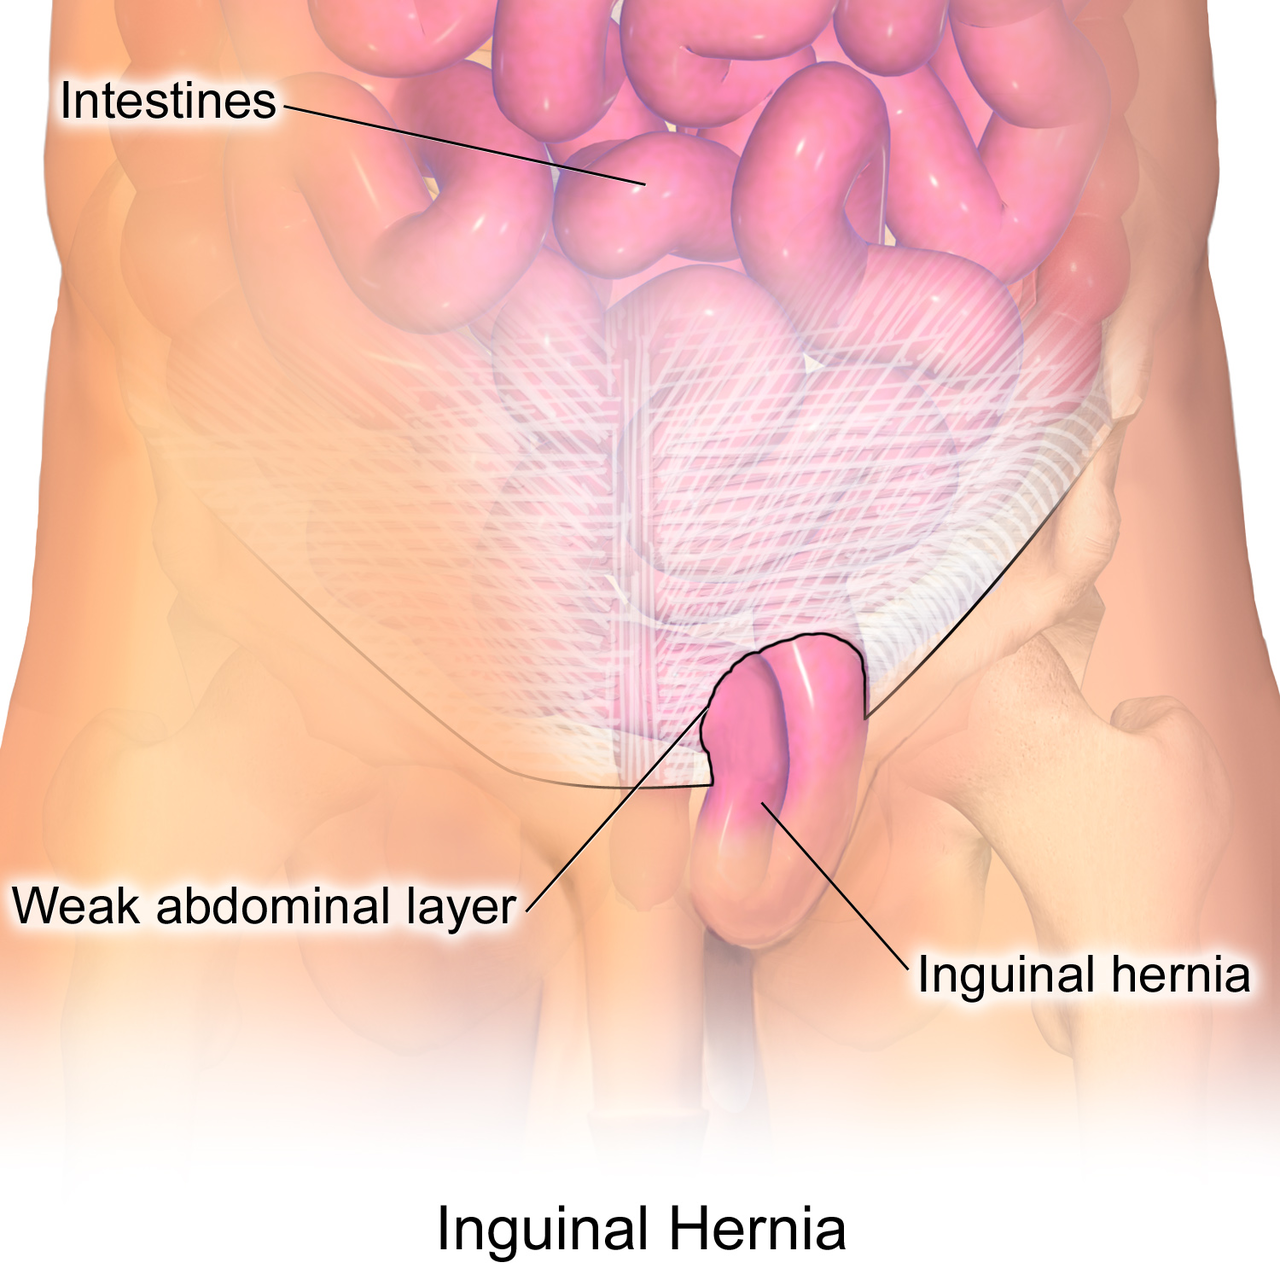 indirect vs direct inguinal hernia